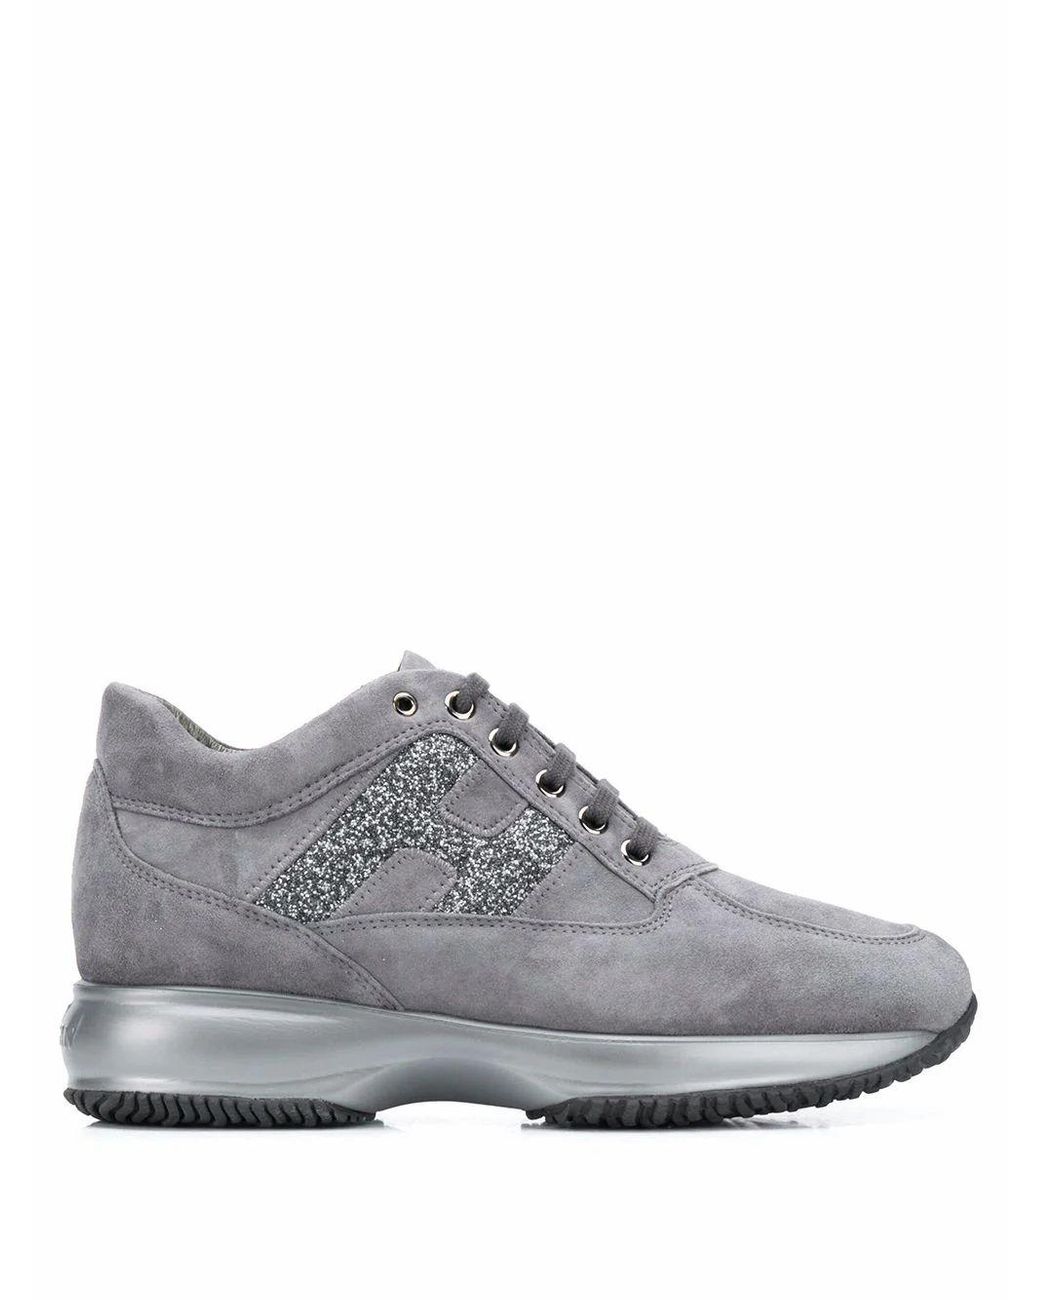 Hogan Suede Sneakers in Grey (Gray) - Lyst